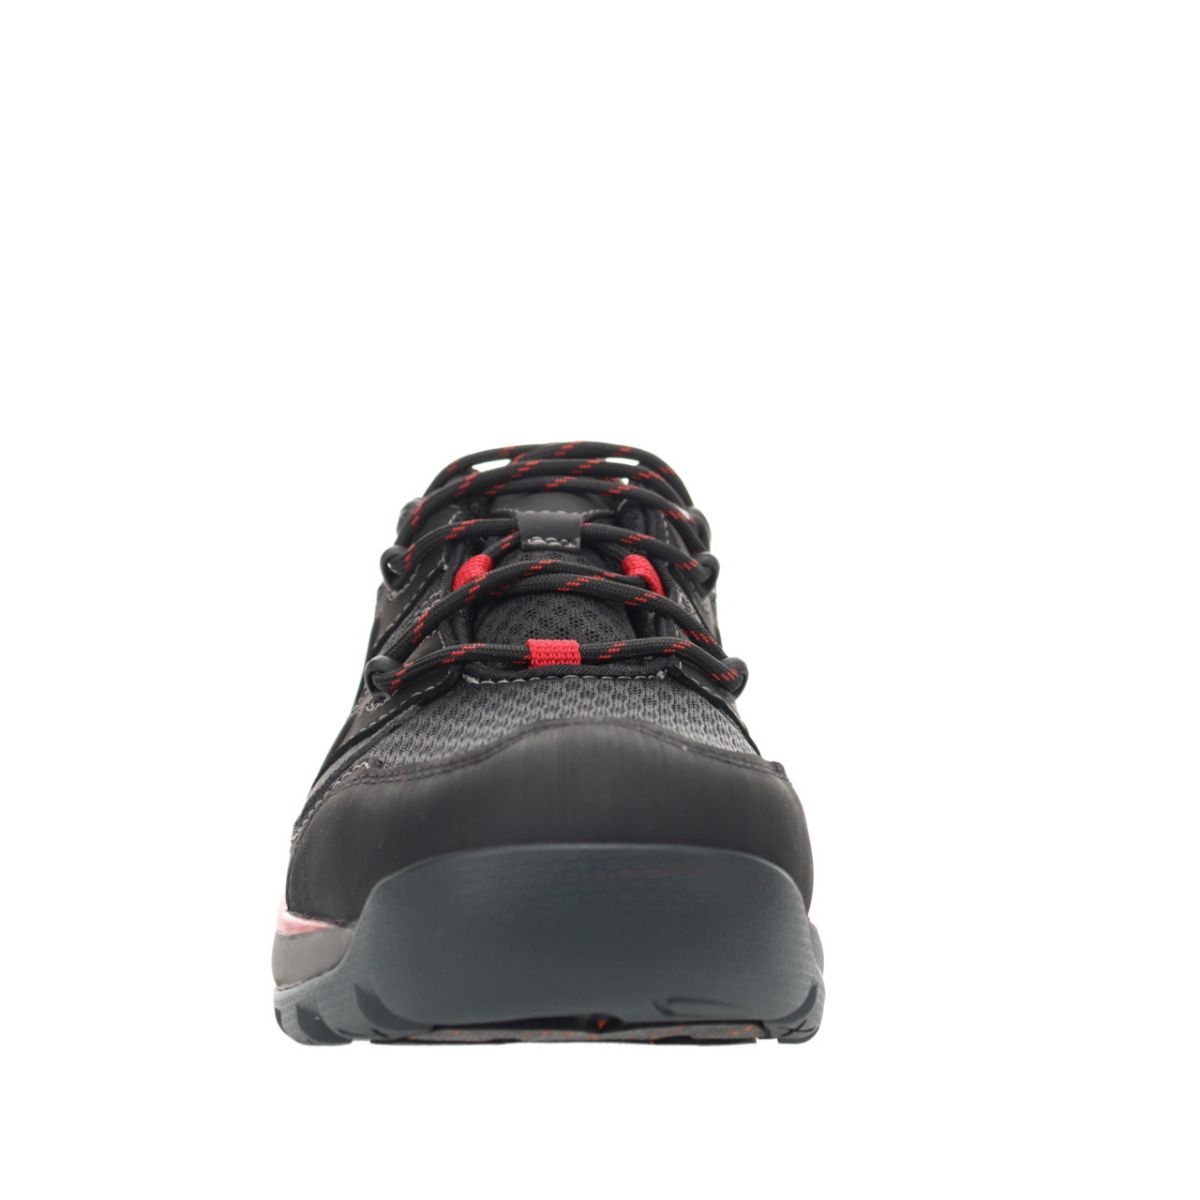 Propet Men's Vercors Hiking Shoe Black/Red - MOA002SBRD BLACK/RED - BLACK/RED, 13 XX-Wide